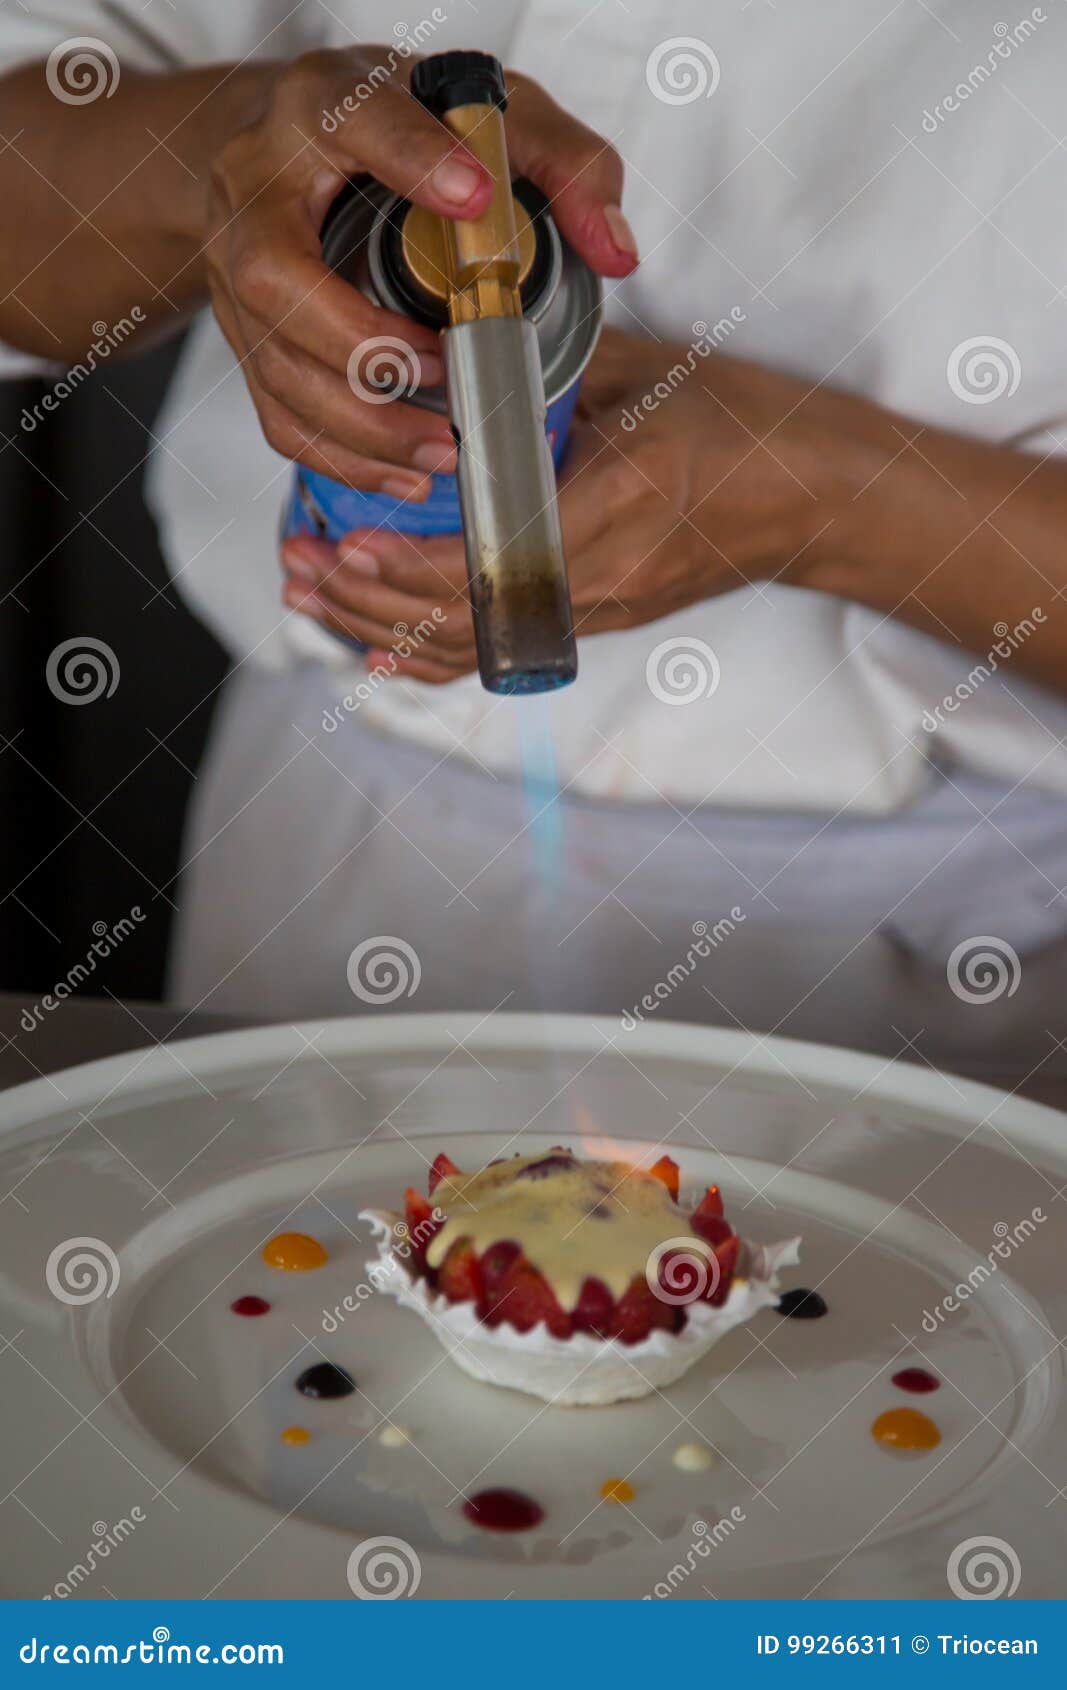 patissier or chef burning creme brulee